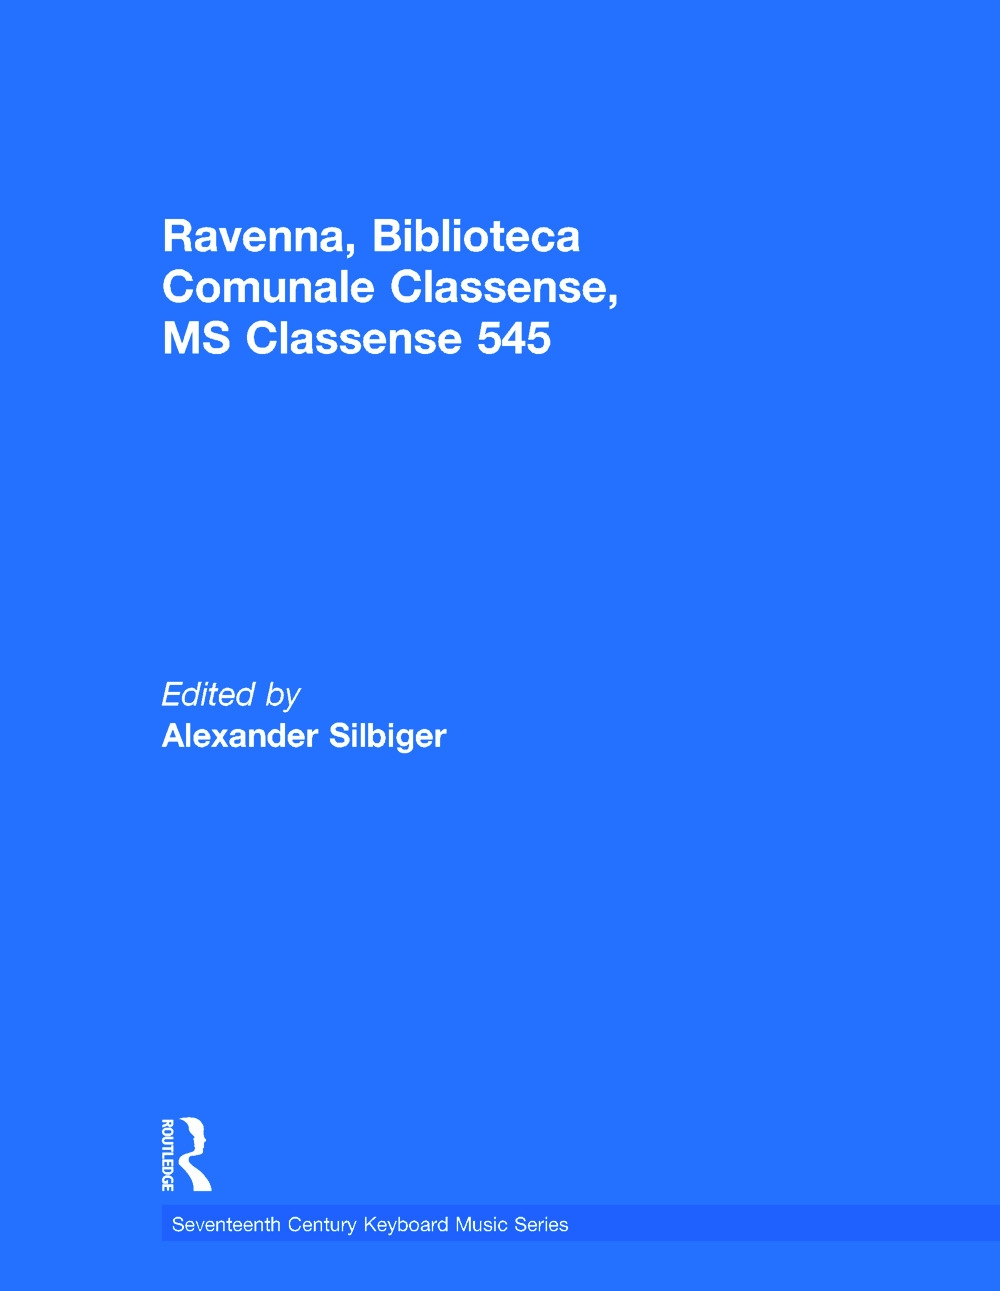 Ravenna, Biblioteca Comunale Classense, MS Classense 545